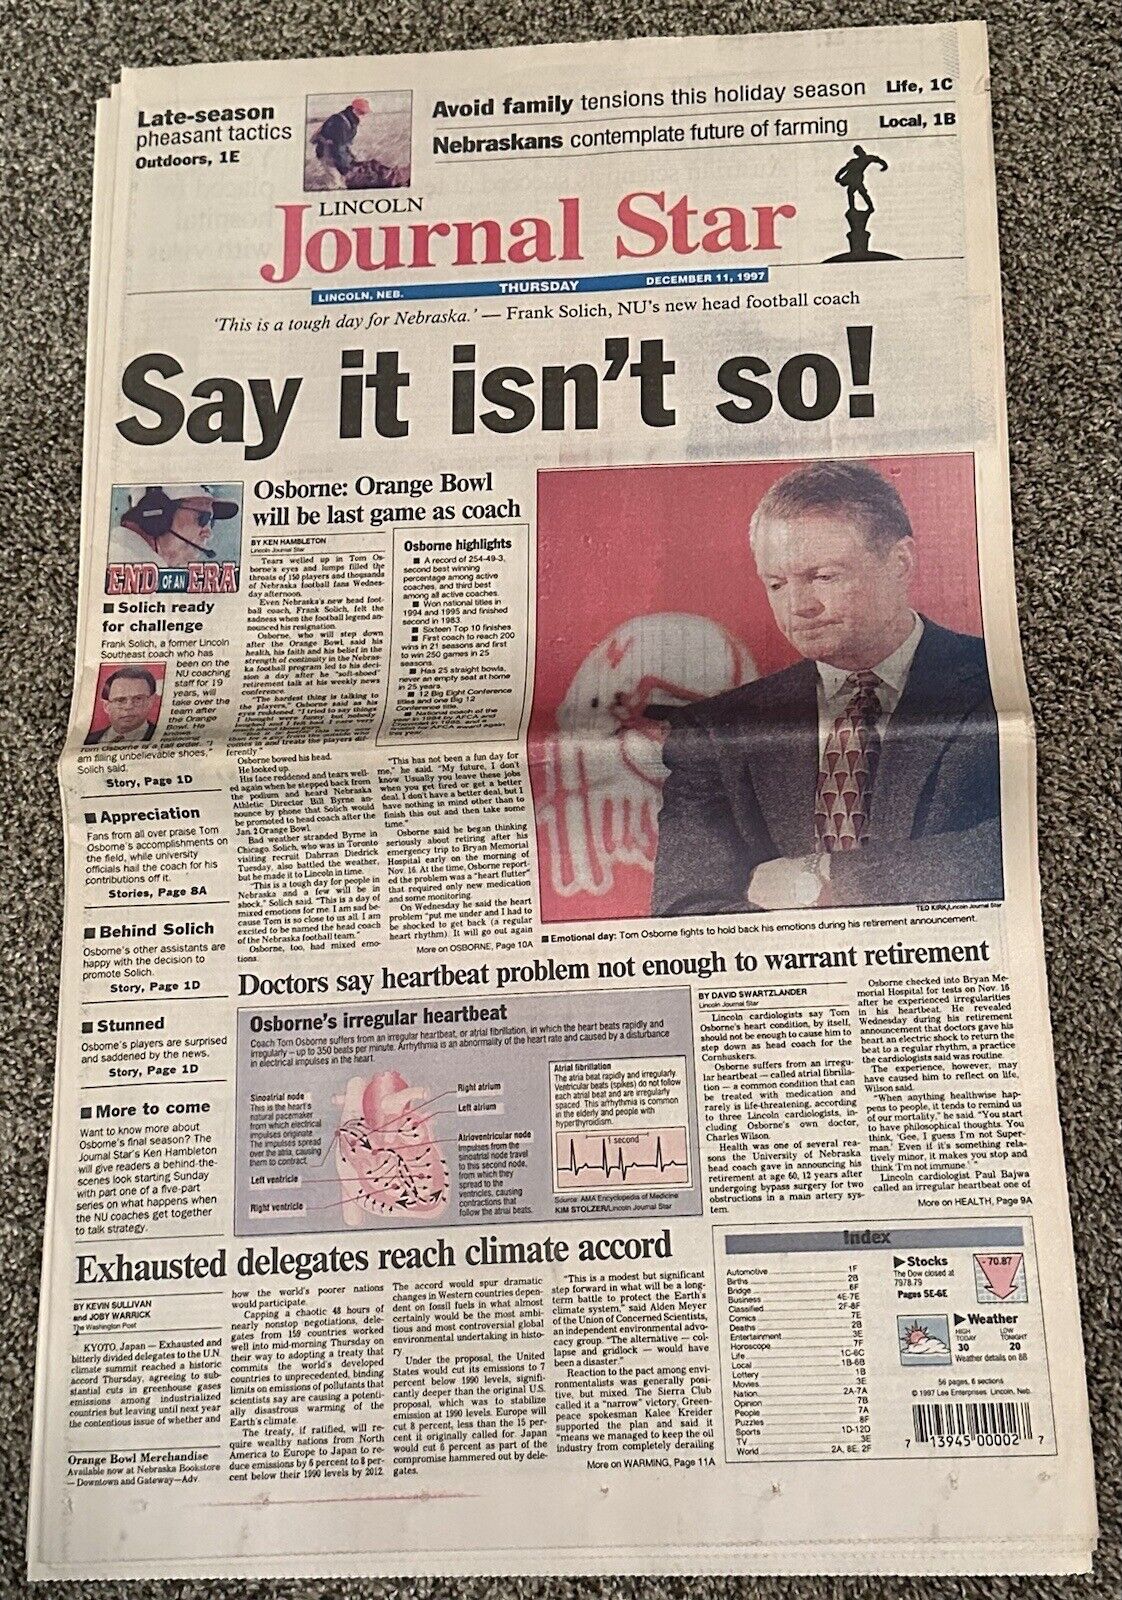 Lincoln Journal Star December 11, 1997 Say It Isn’t So Tom Osborne Last Game